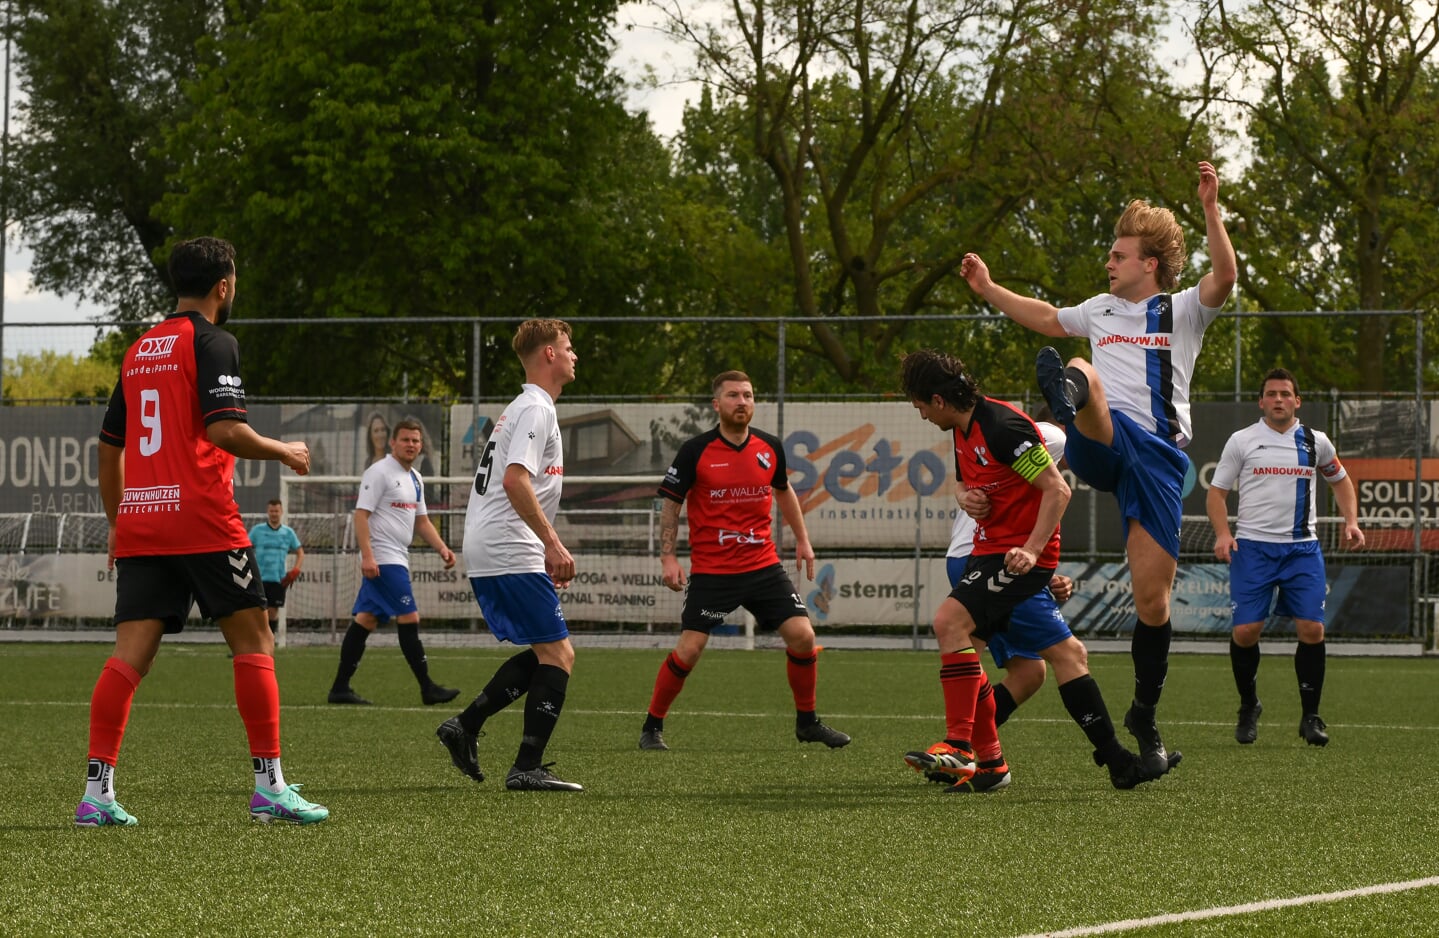 • IFC - Streefkerk (3-0).